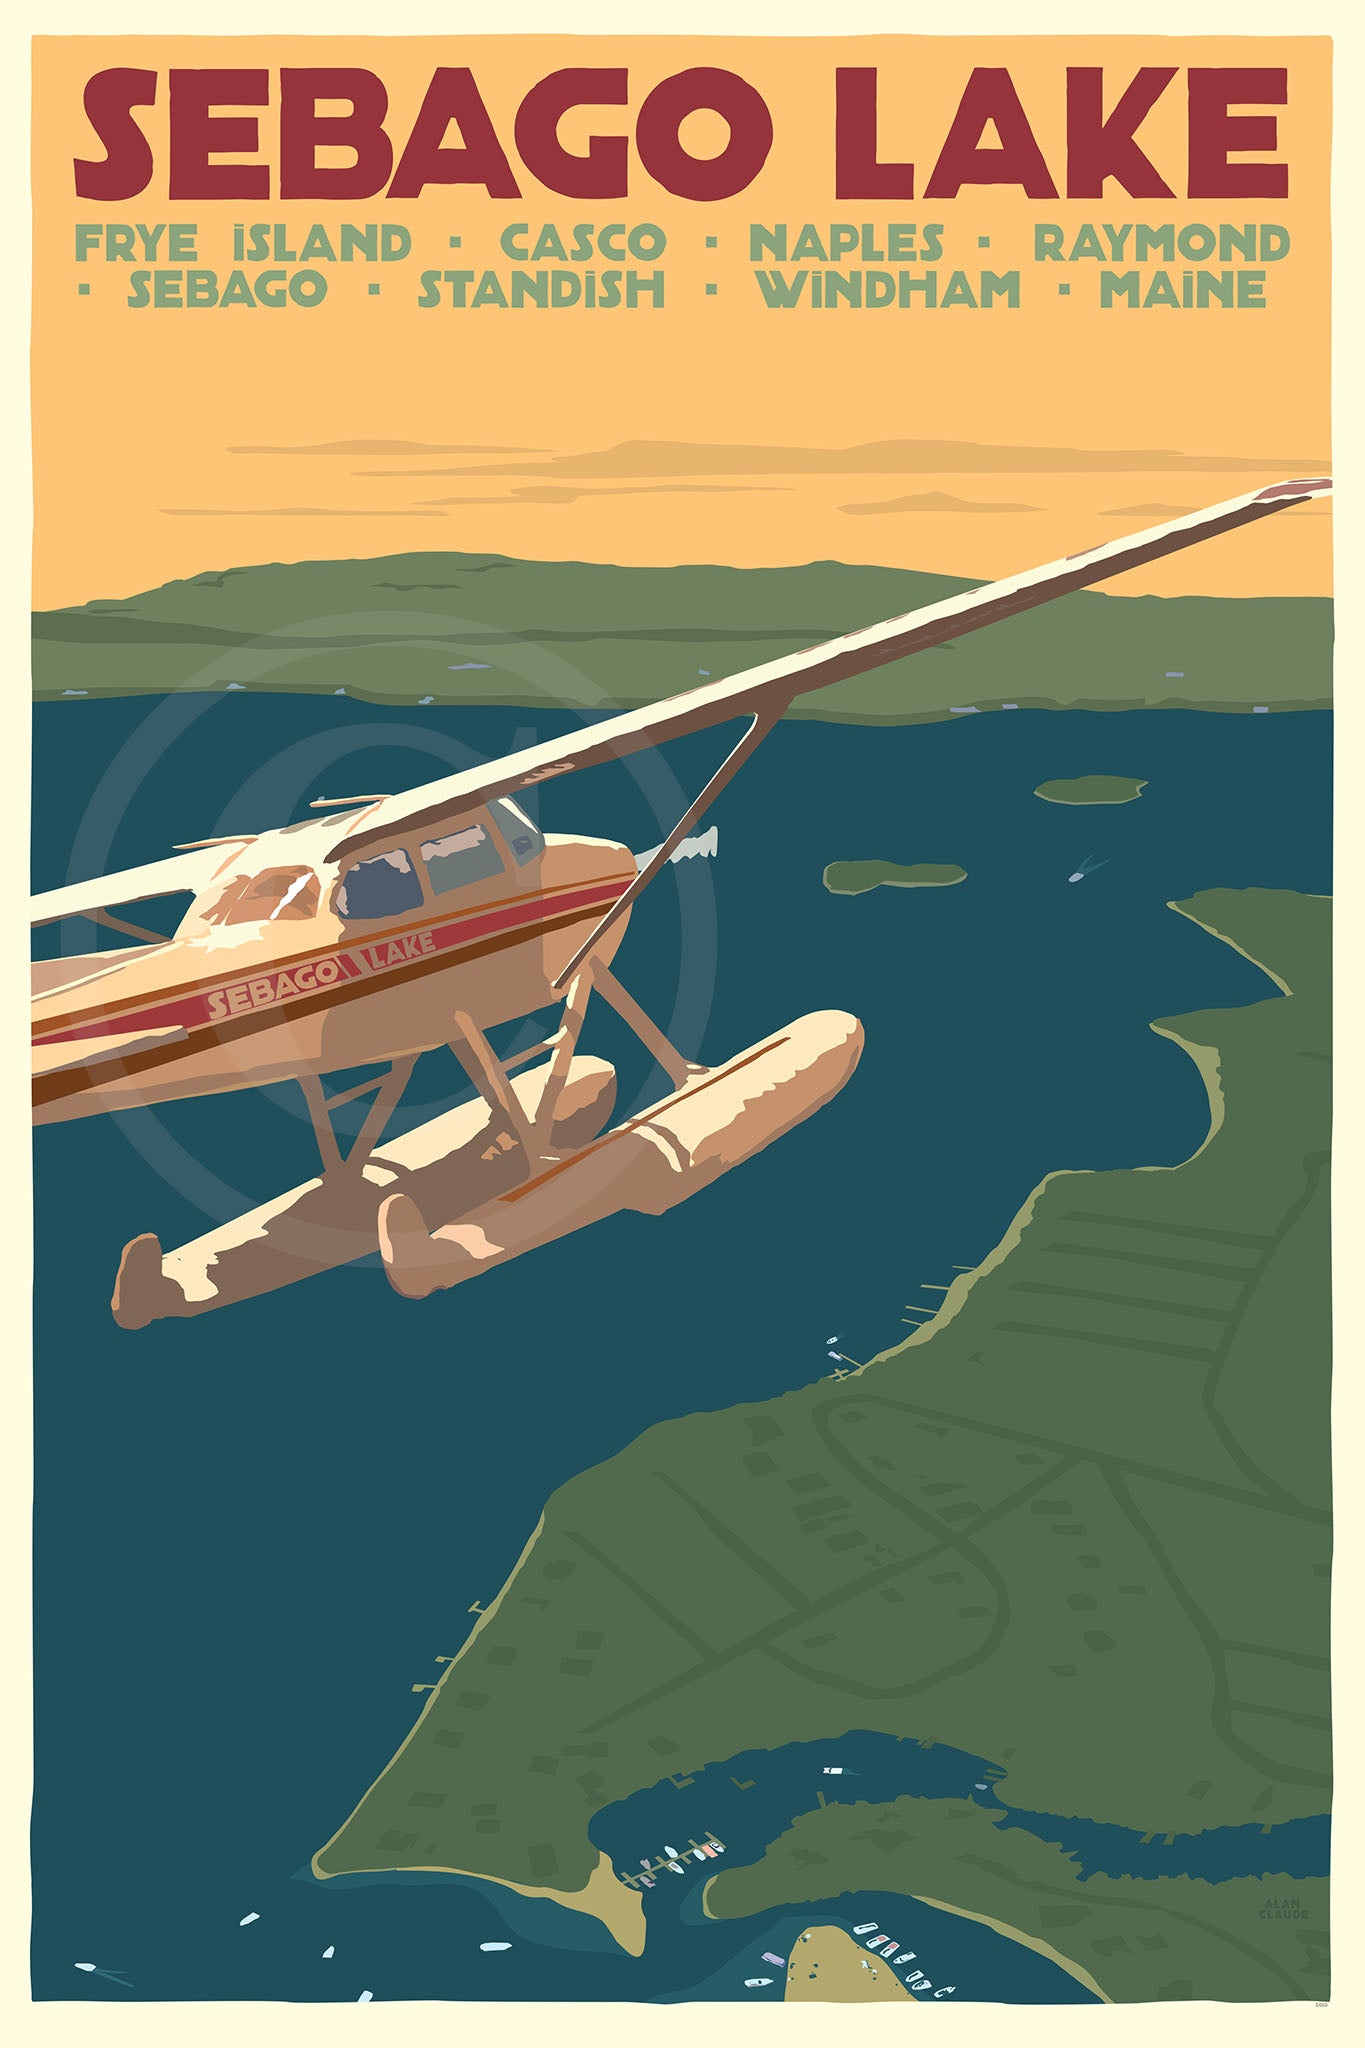 Sebago Lake Seaplane Art Print 24" x 36" Travel Poster By Alan Claude - Maine